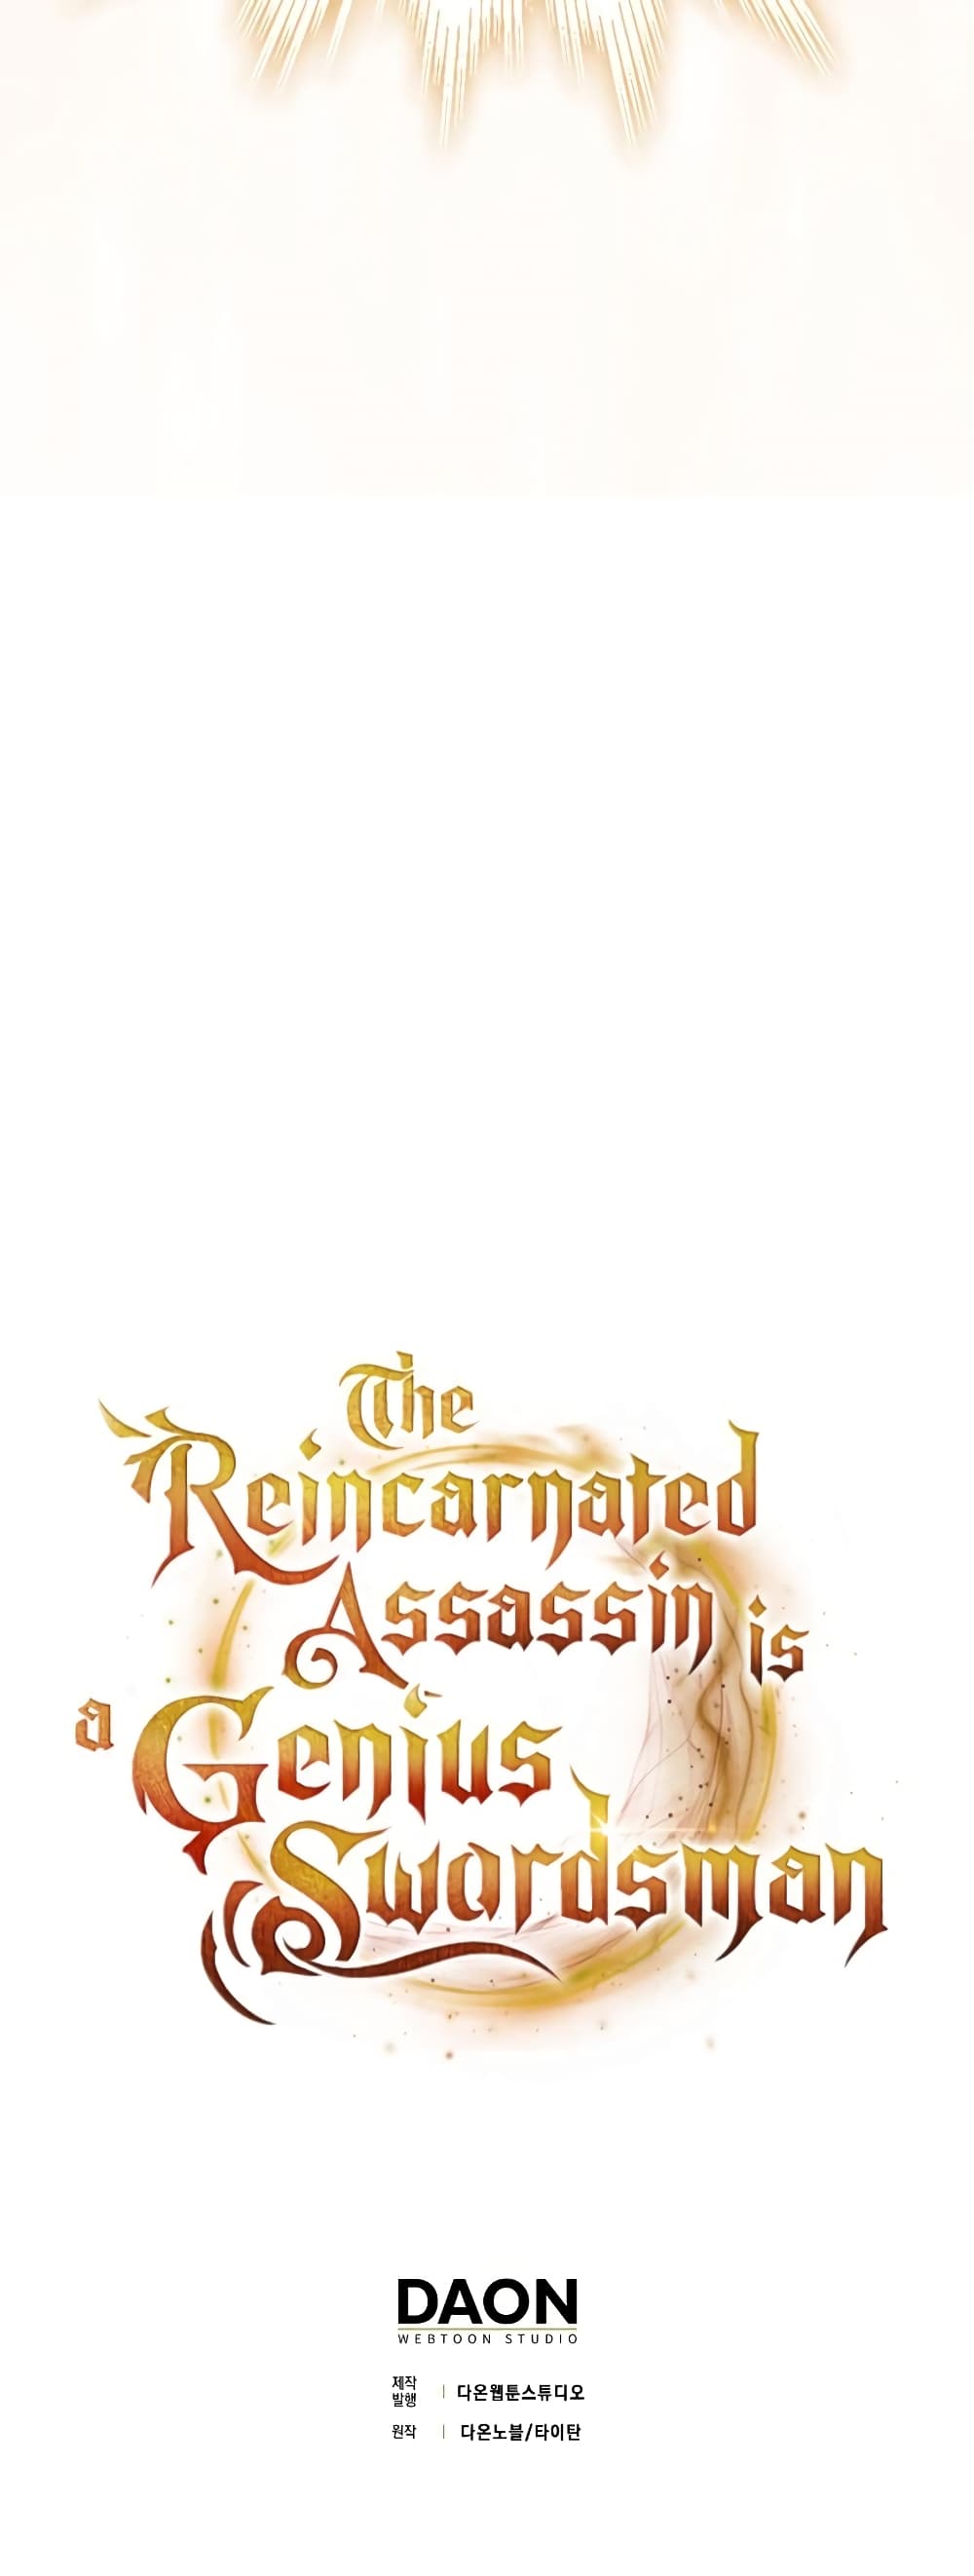 The Reincarnated Assassin is a Genius Swordsman 1-1